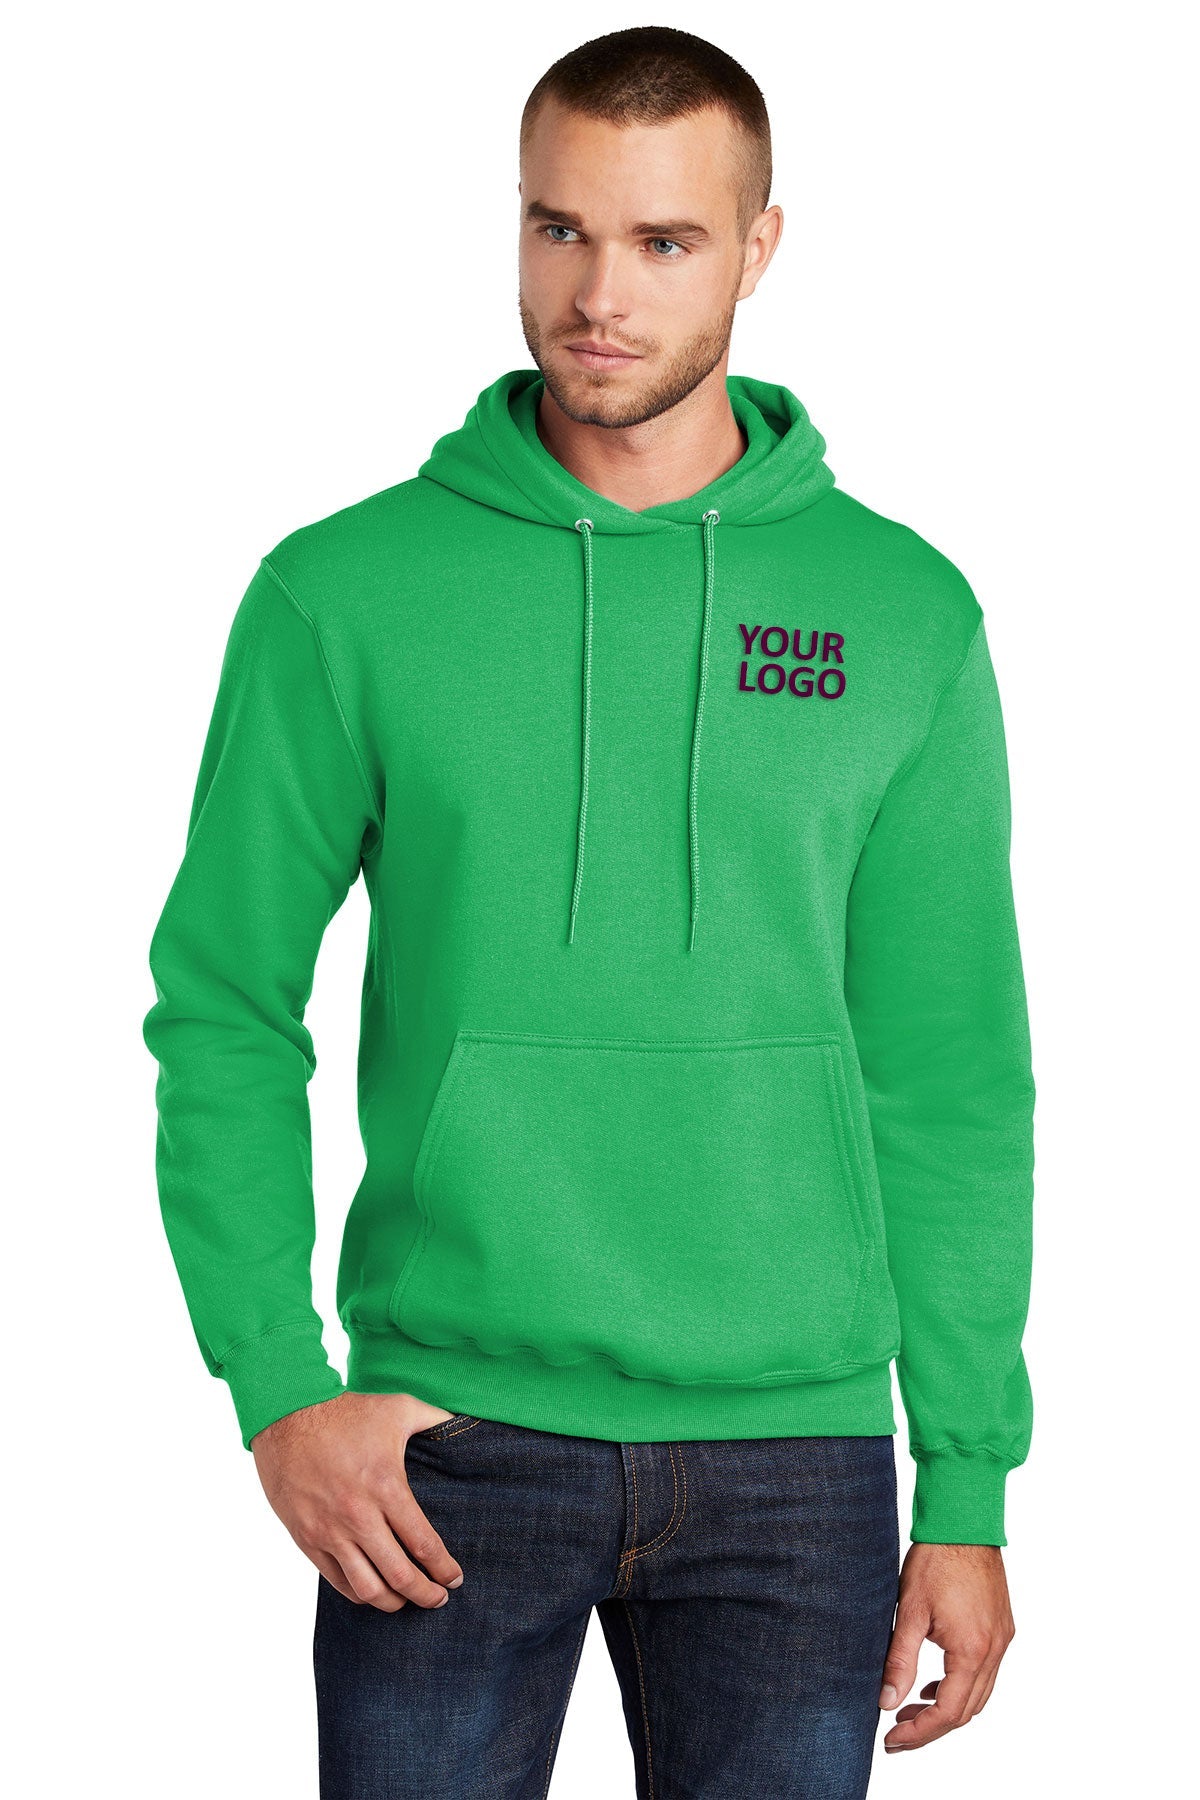 port & company clover green pc78h custom sweatshirts for business